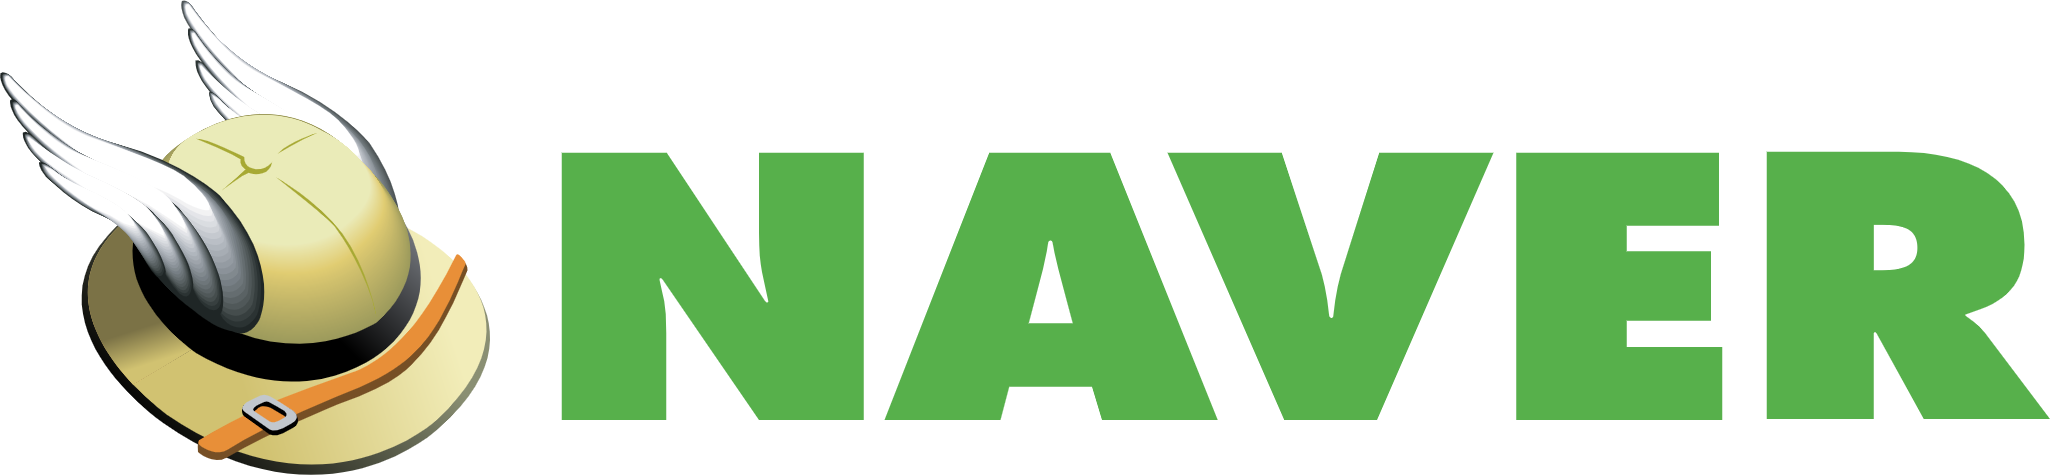 Naver logo large (transparent PNG)